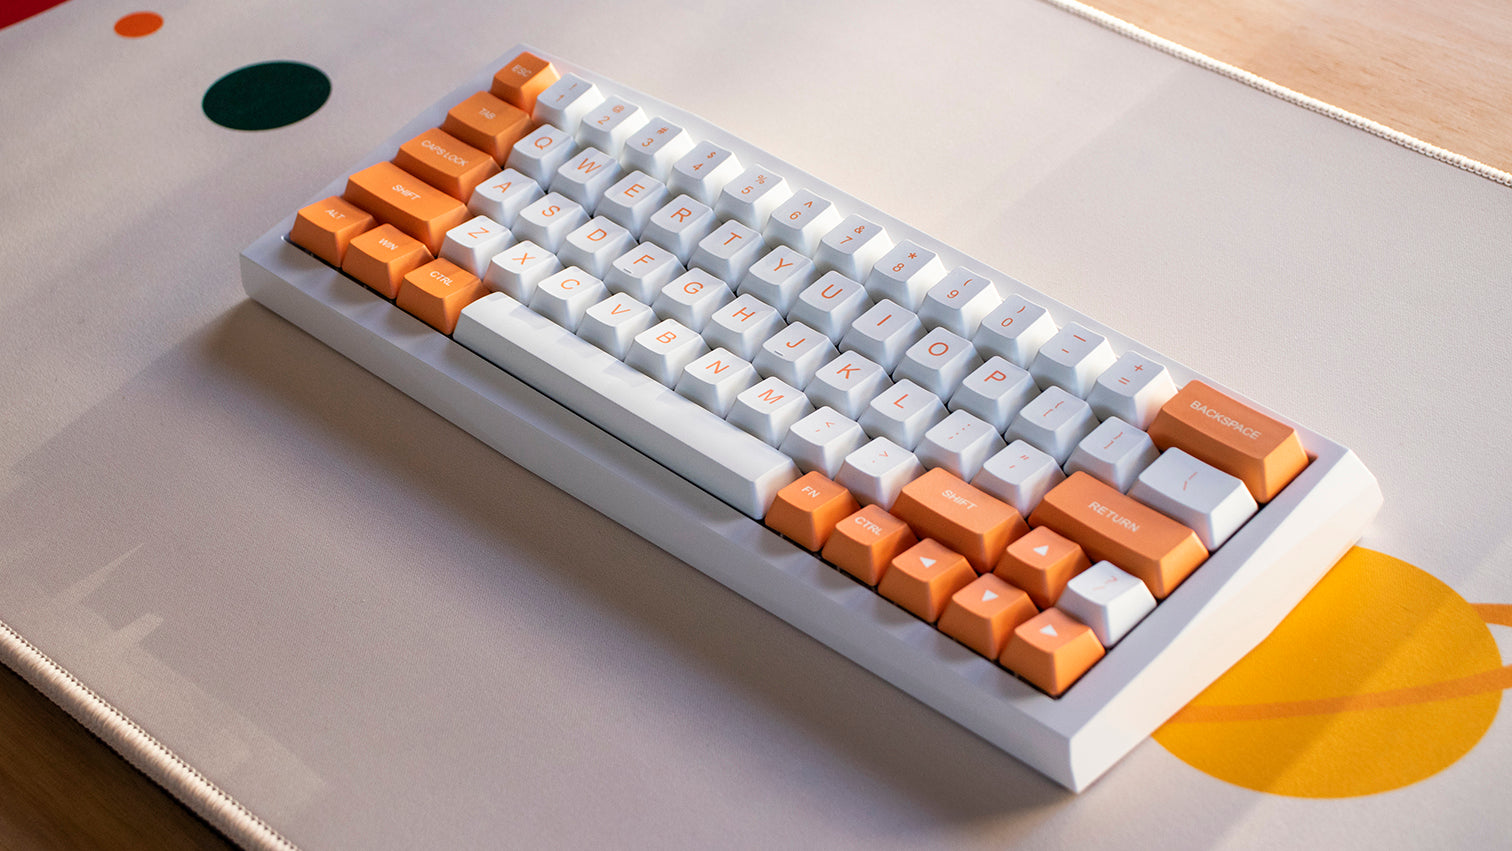 Tangy Keyboard HOTSWAP RGB 60%